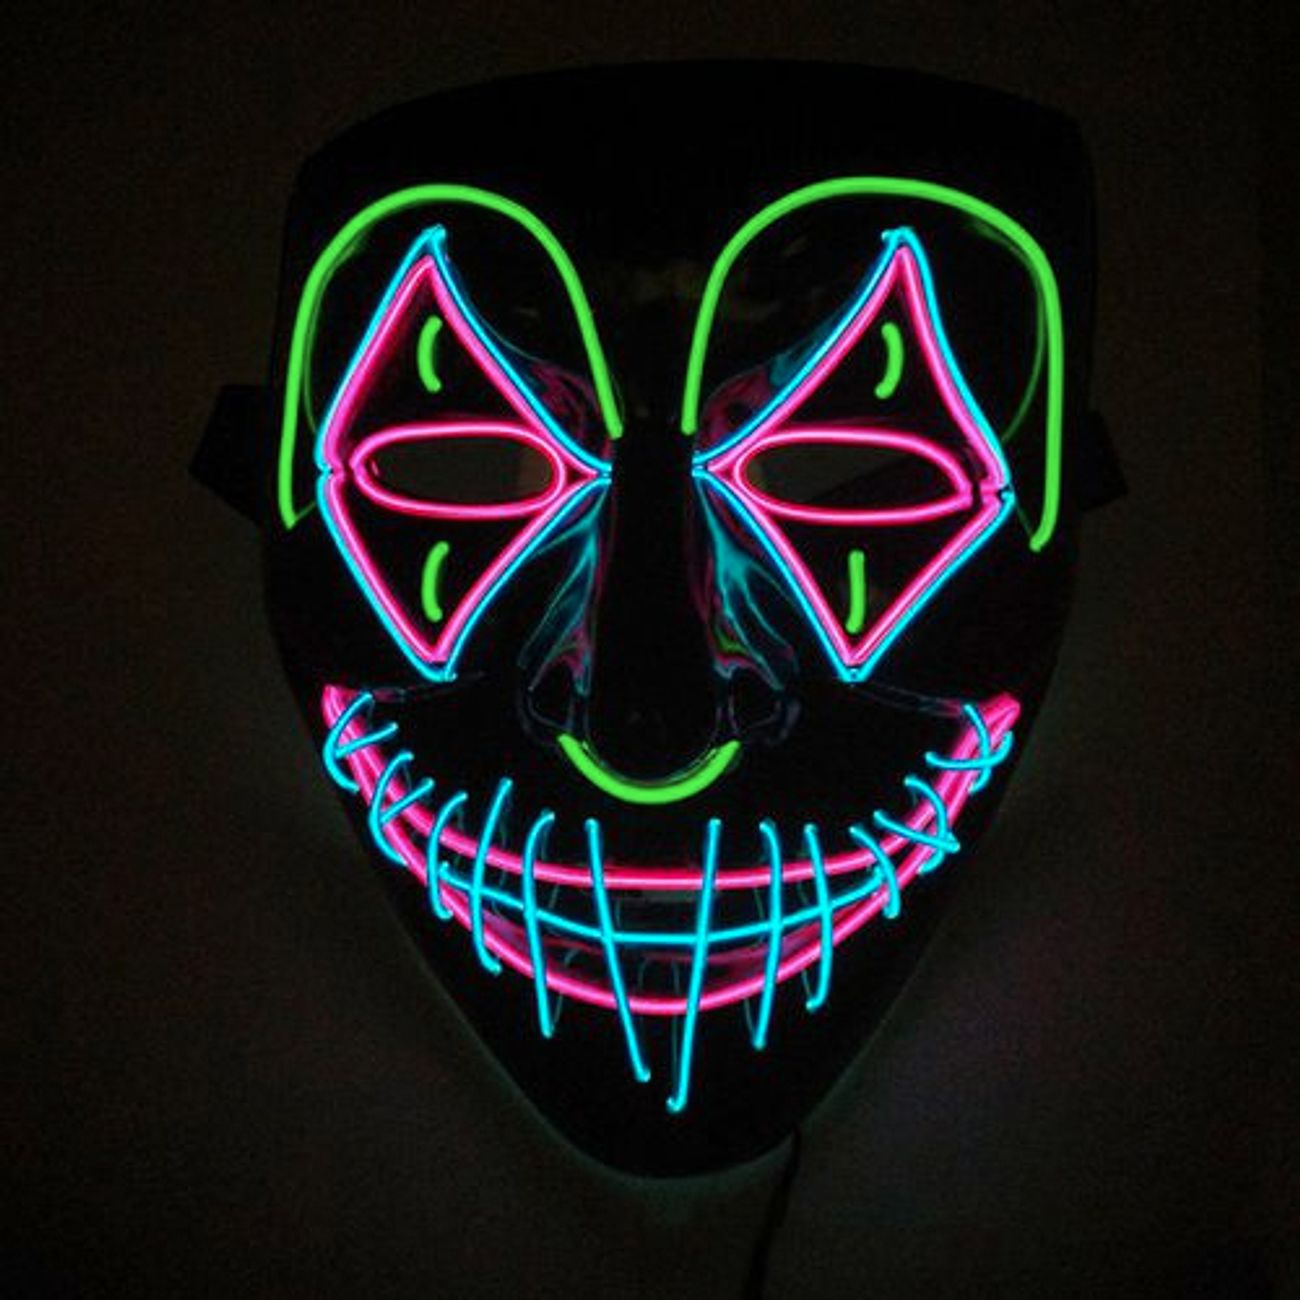 el-wire-joker-led-mask-73225-1